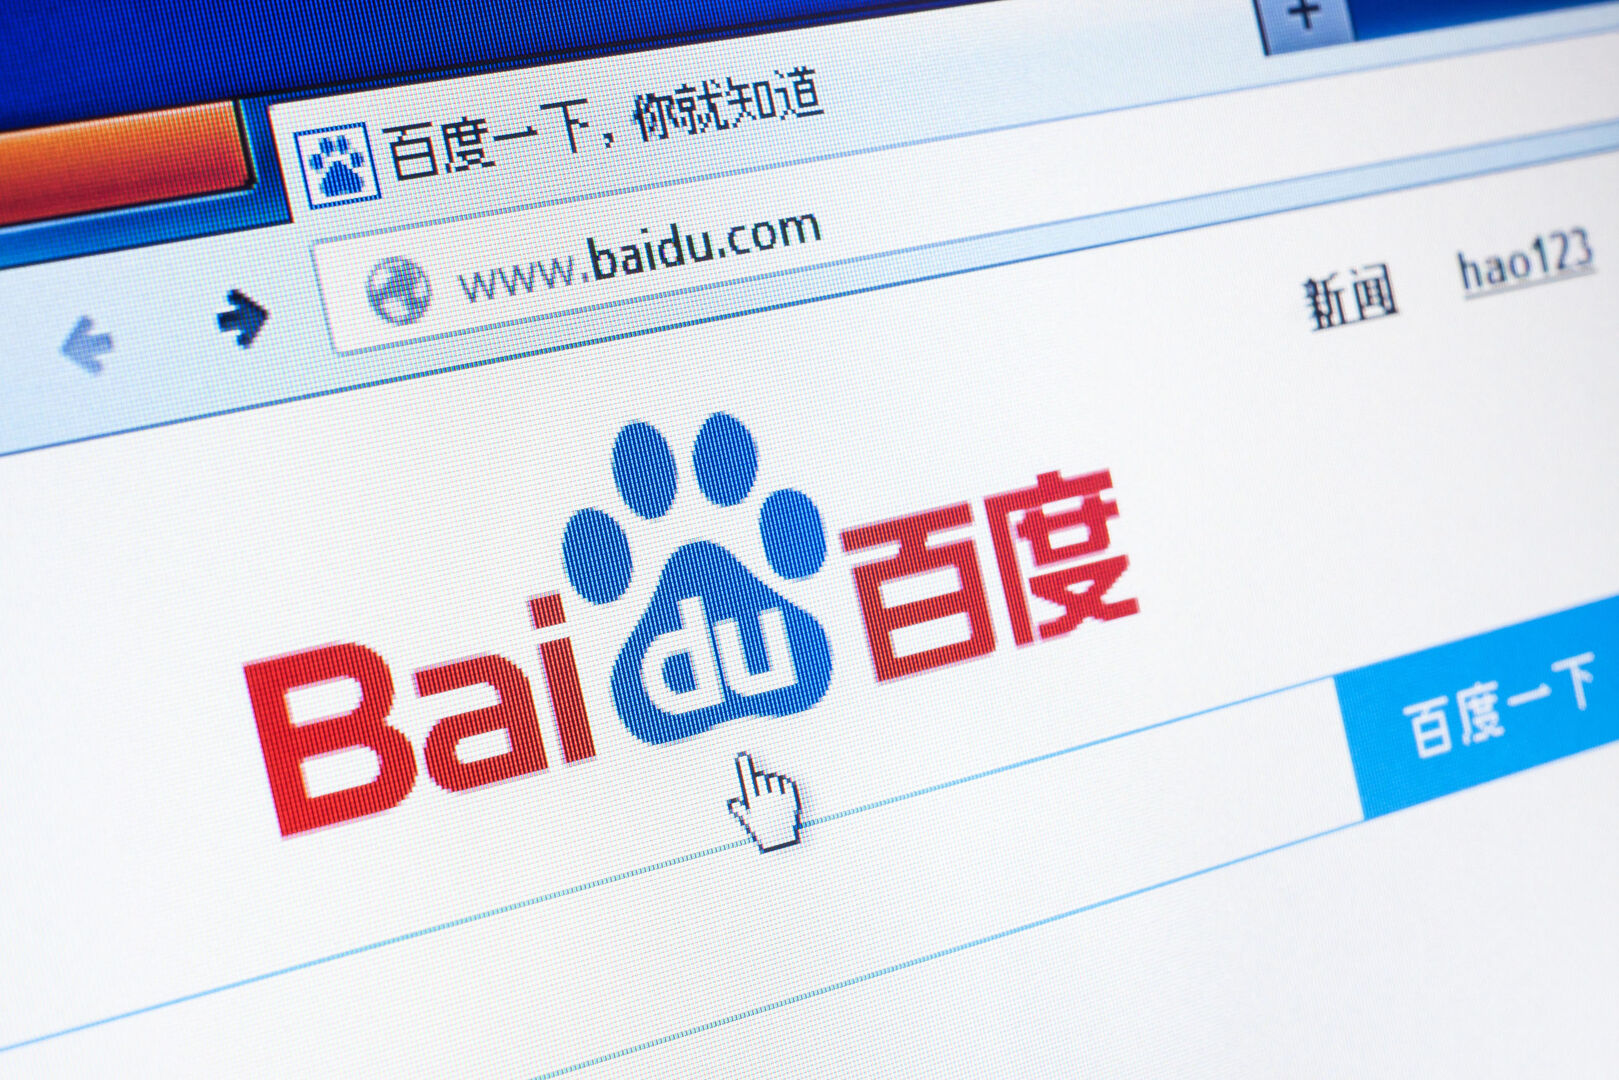 Baidu story